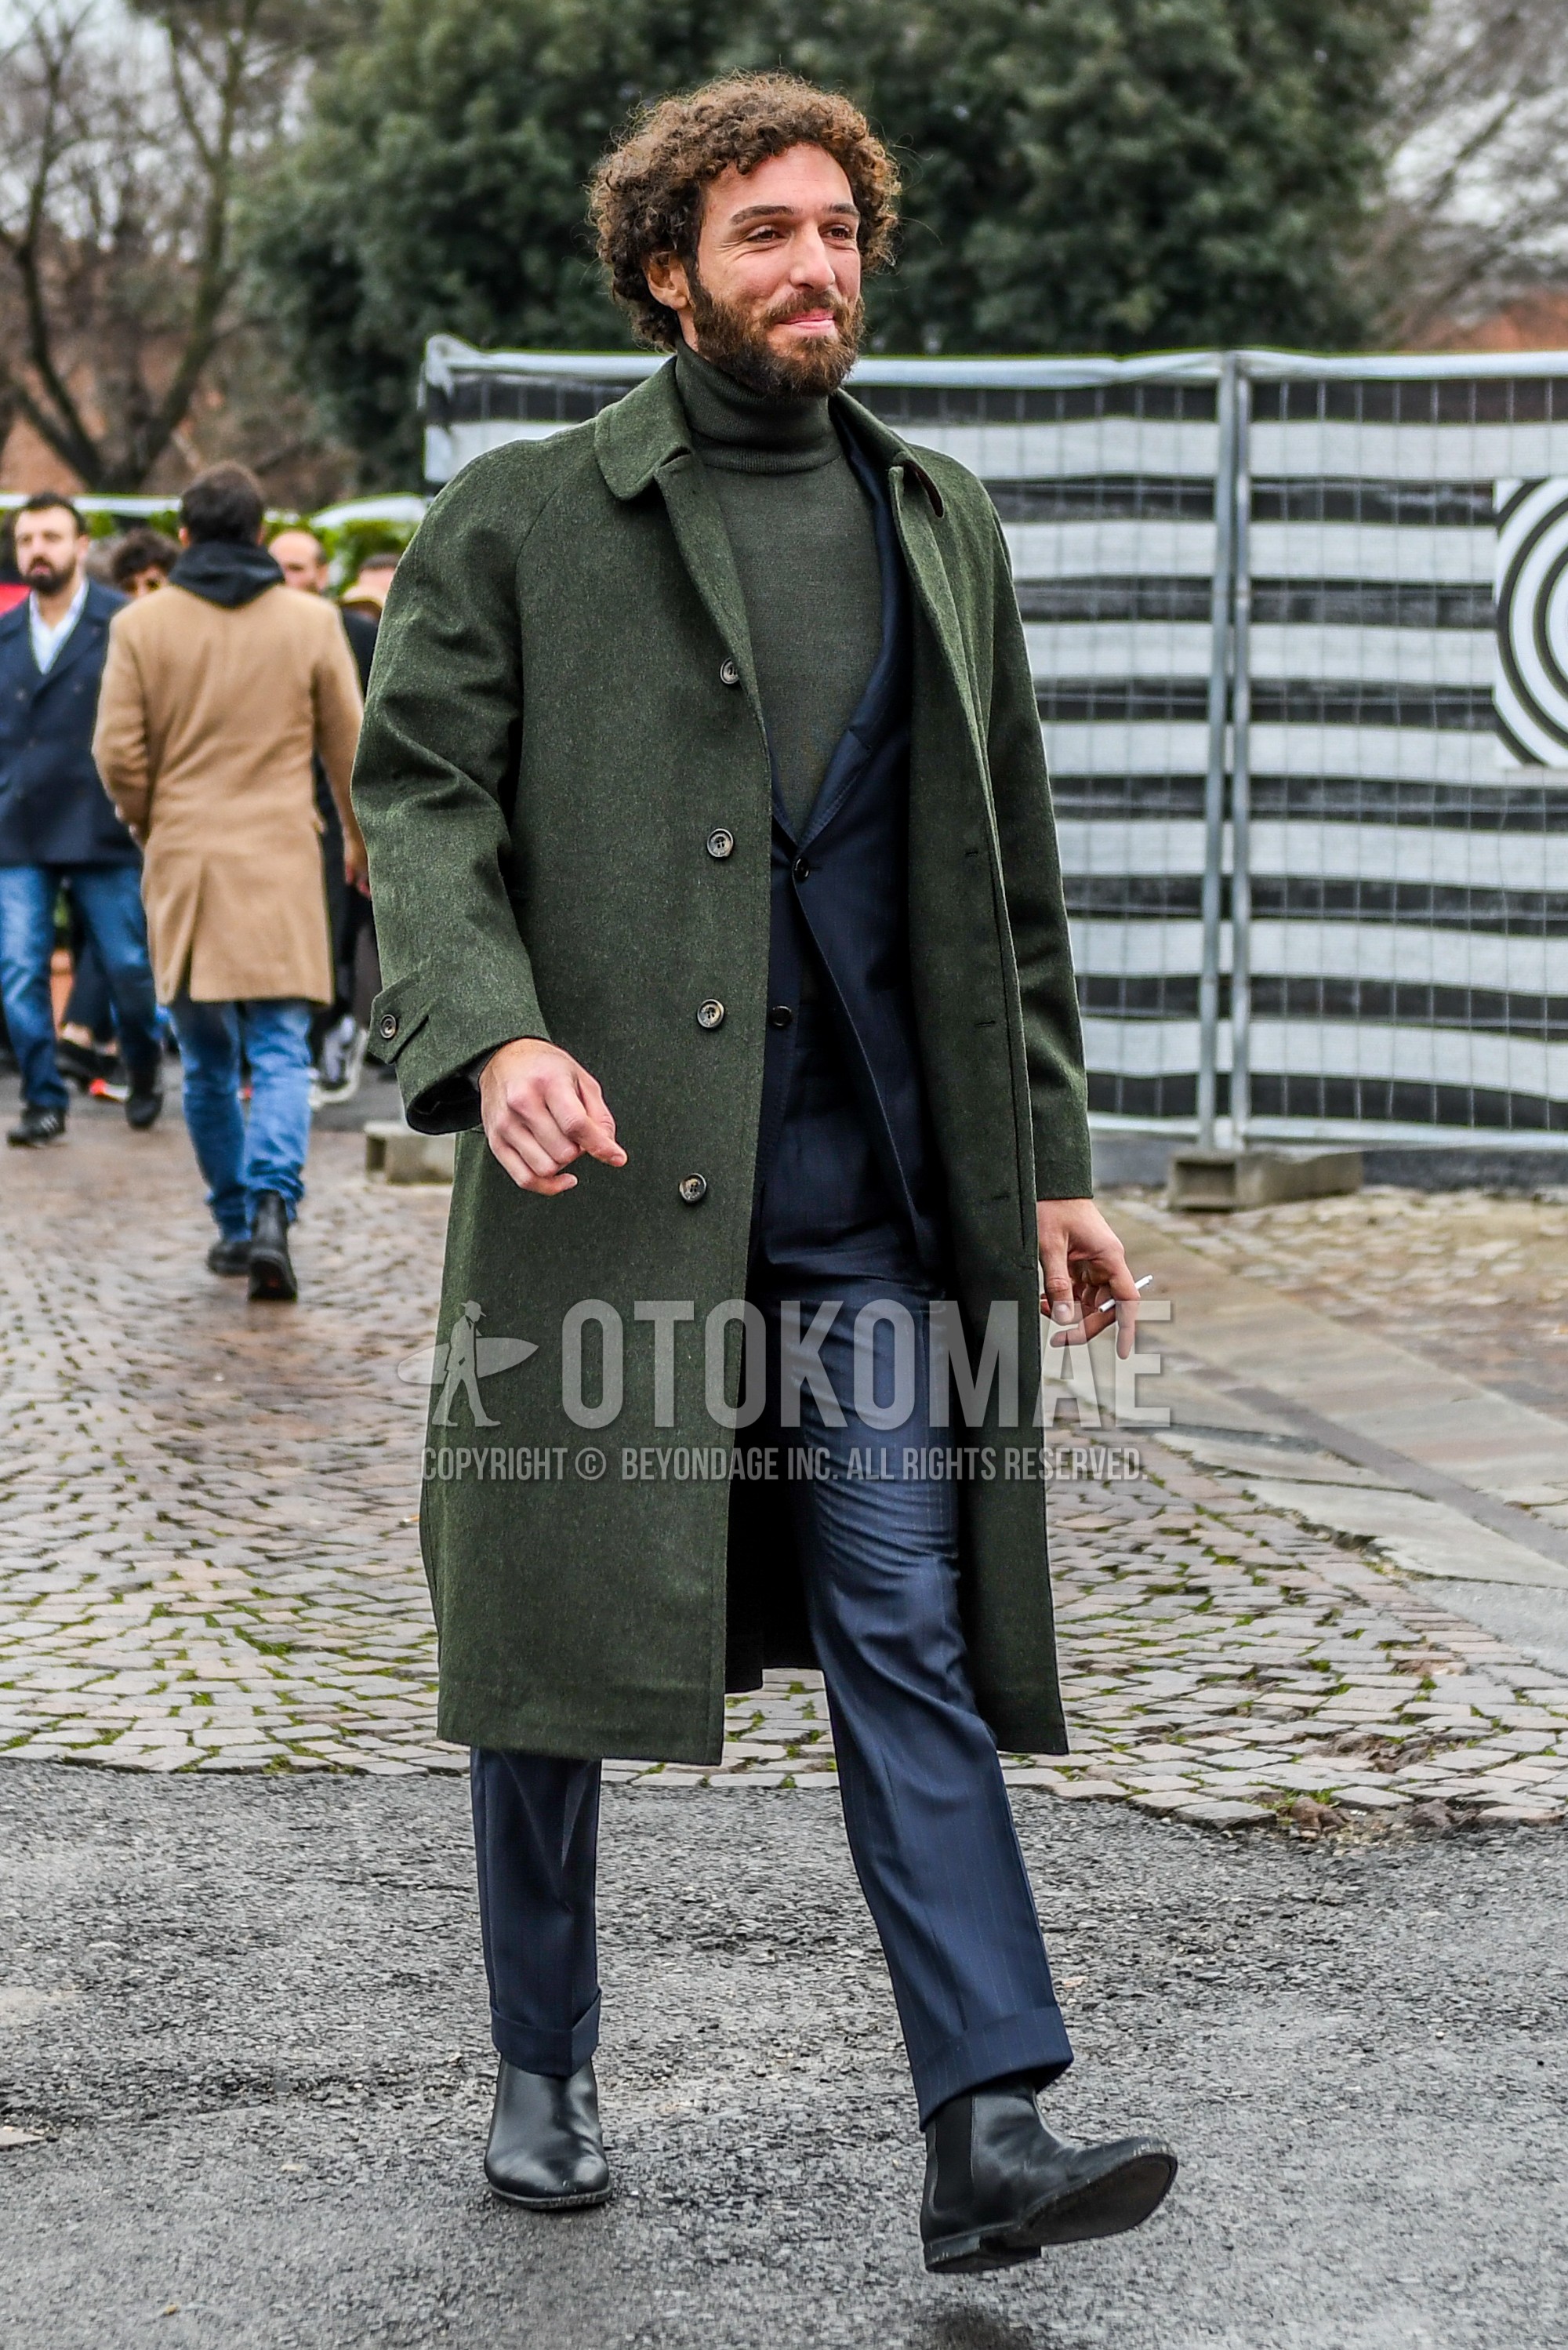 Men's winter outfit with olive green plain stenkarrer coat, olive green plain turtleneck knit, black side-gore boots, gray plain suit.